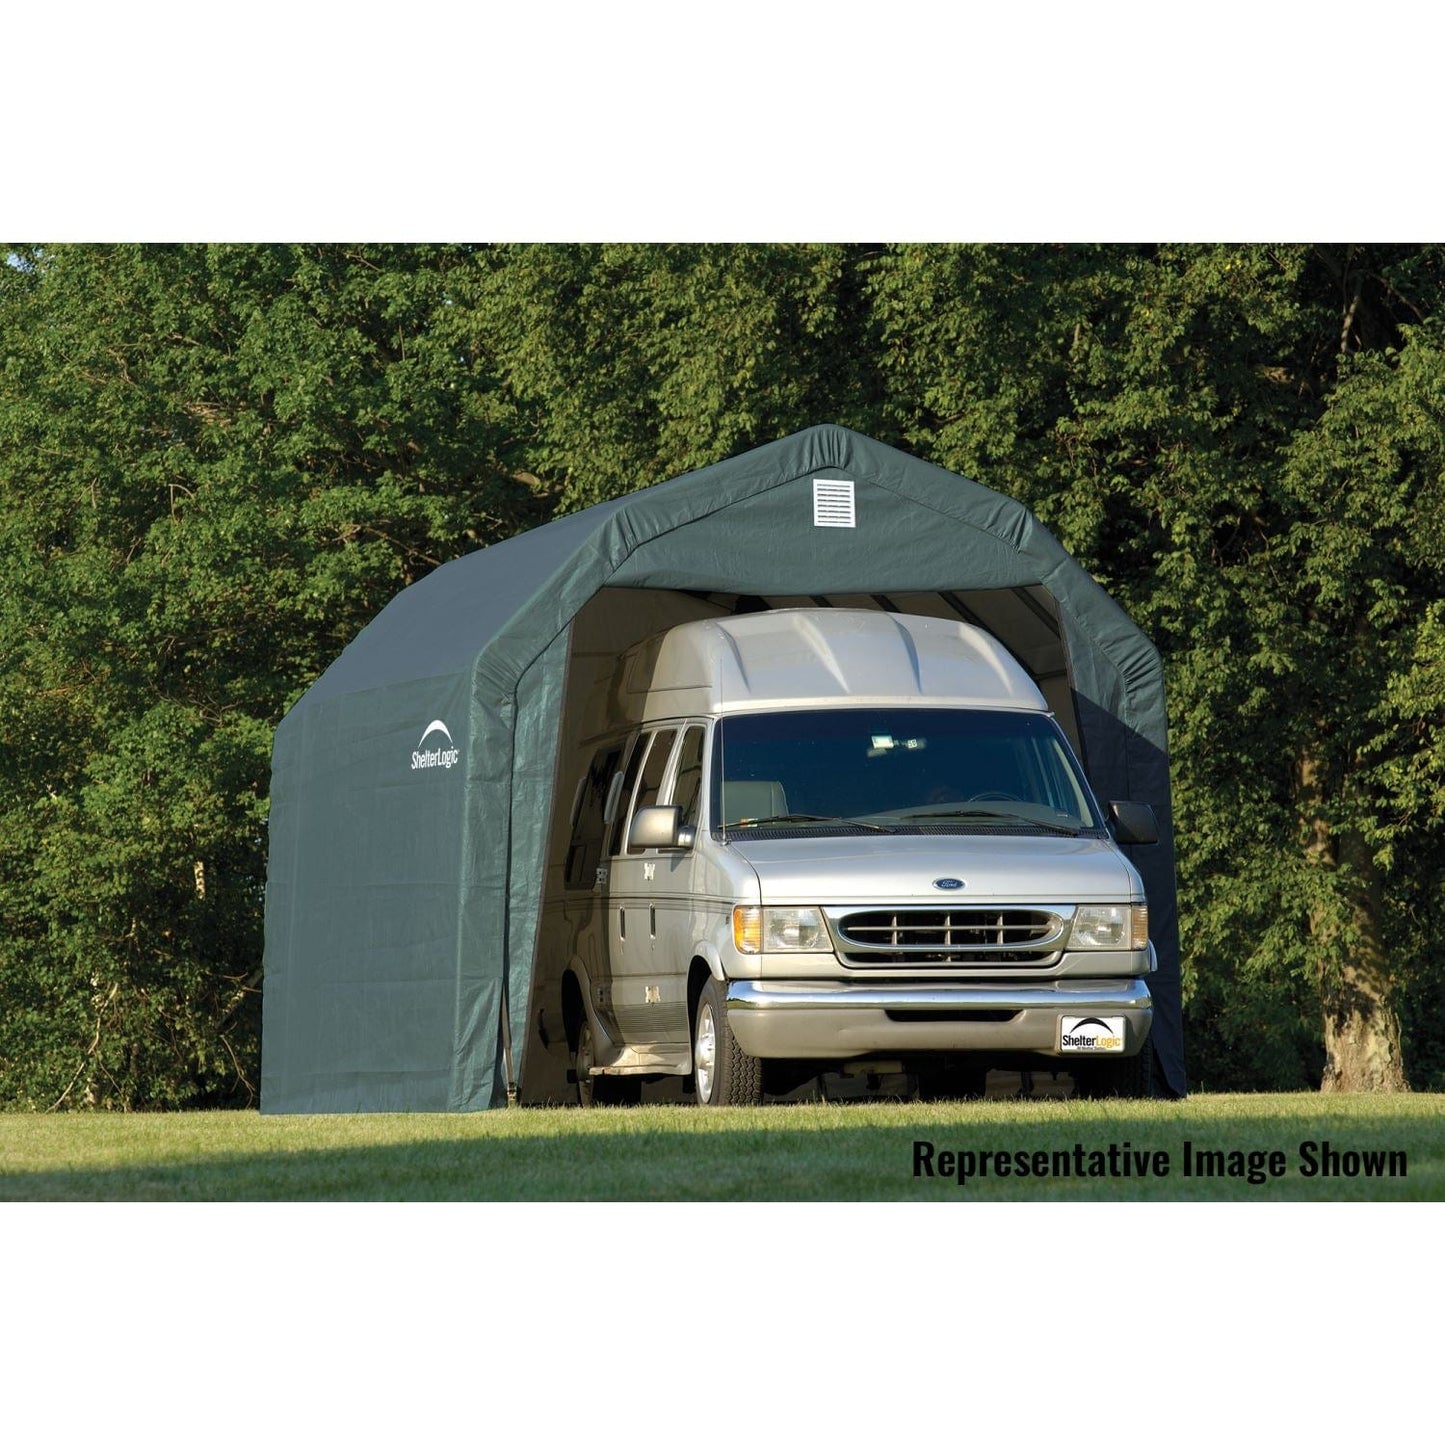 ShelterLogic Portable Garage ShelterLogic | ShelterCoat 12 x 20 ft. Garage Barn Green STD 97054